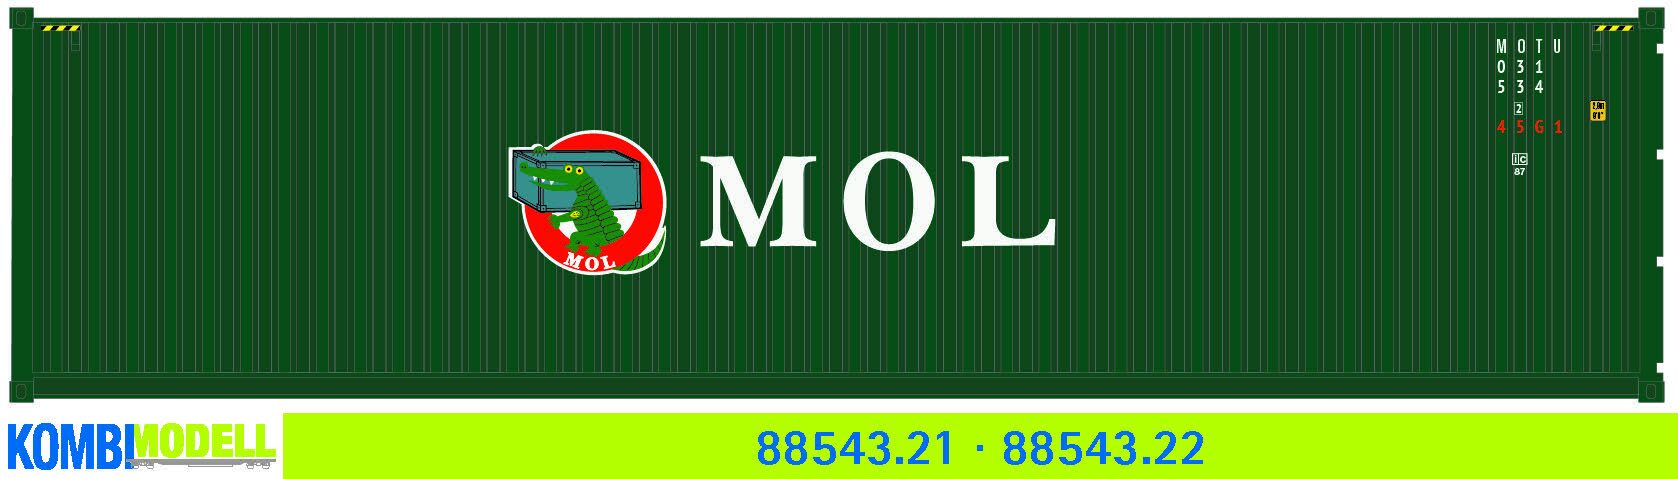 Kombimodell 88543.22 Ct 40' (45G1) »MOL« (Krokodil Kiste Logo) ═ SoSe 